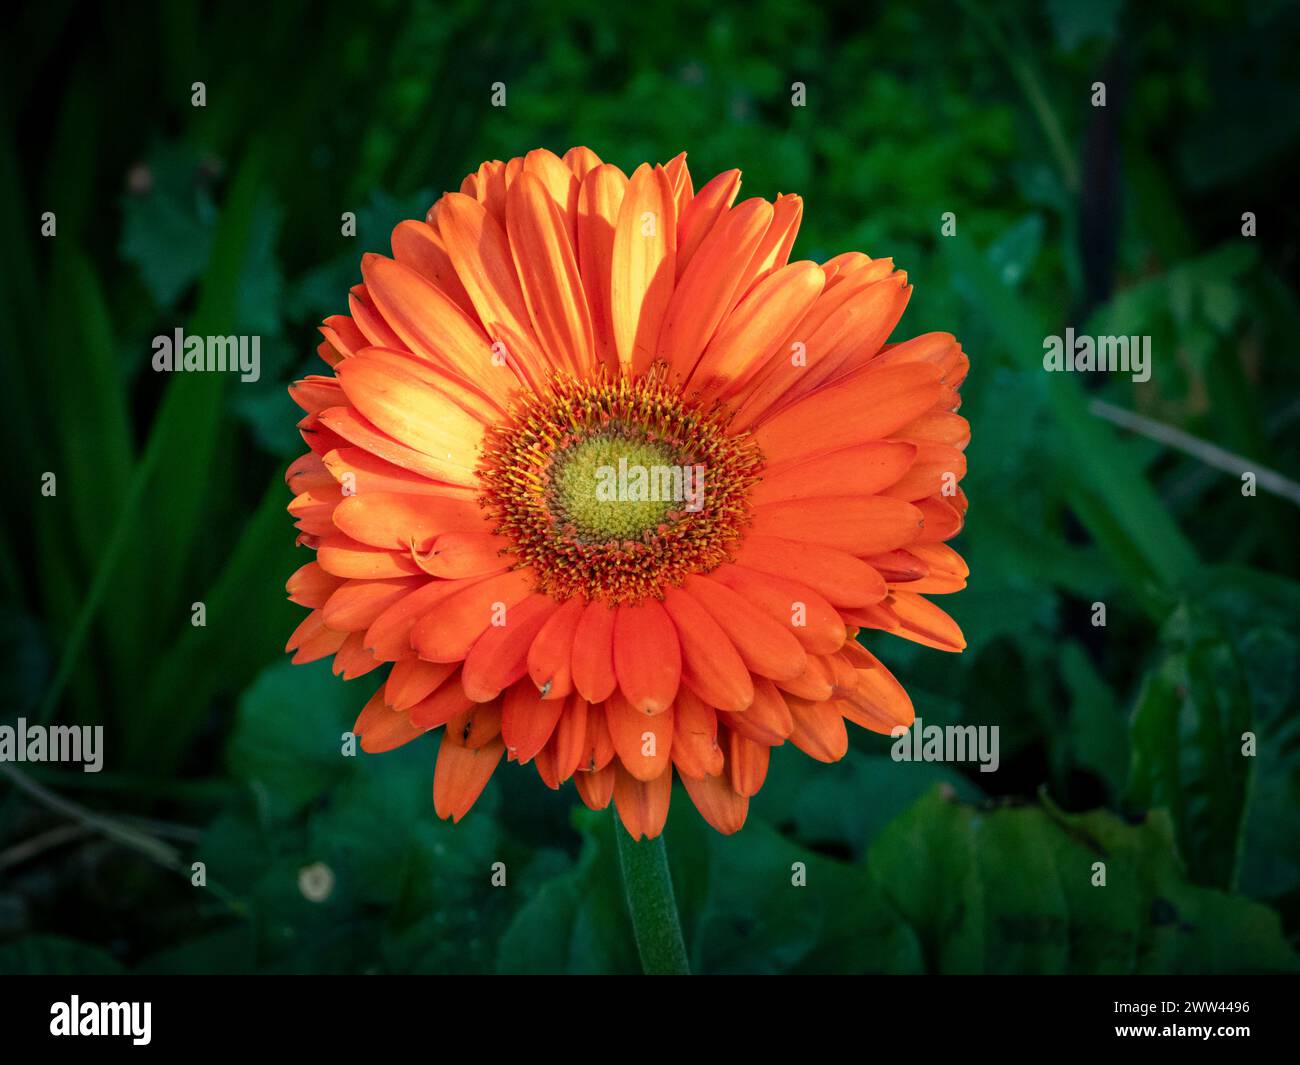 An orange flower atop green stems against dark backdrop Stock Photo